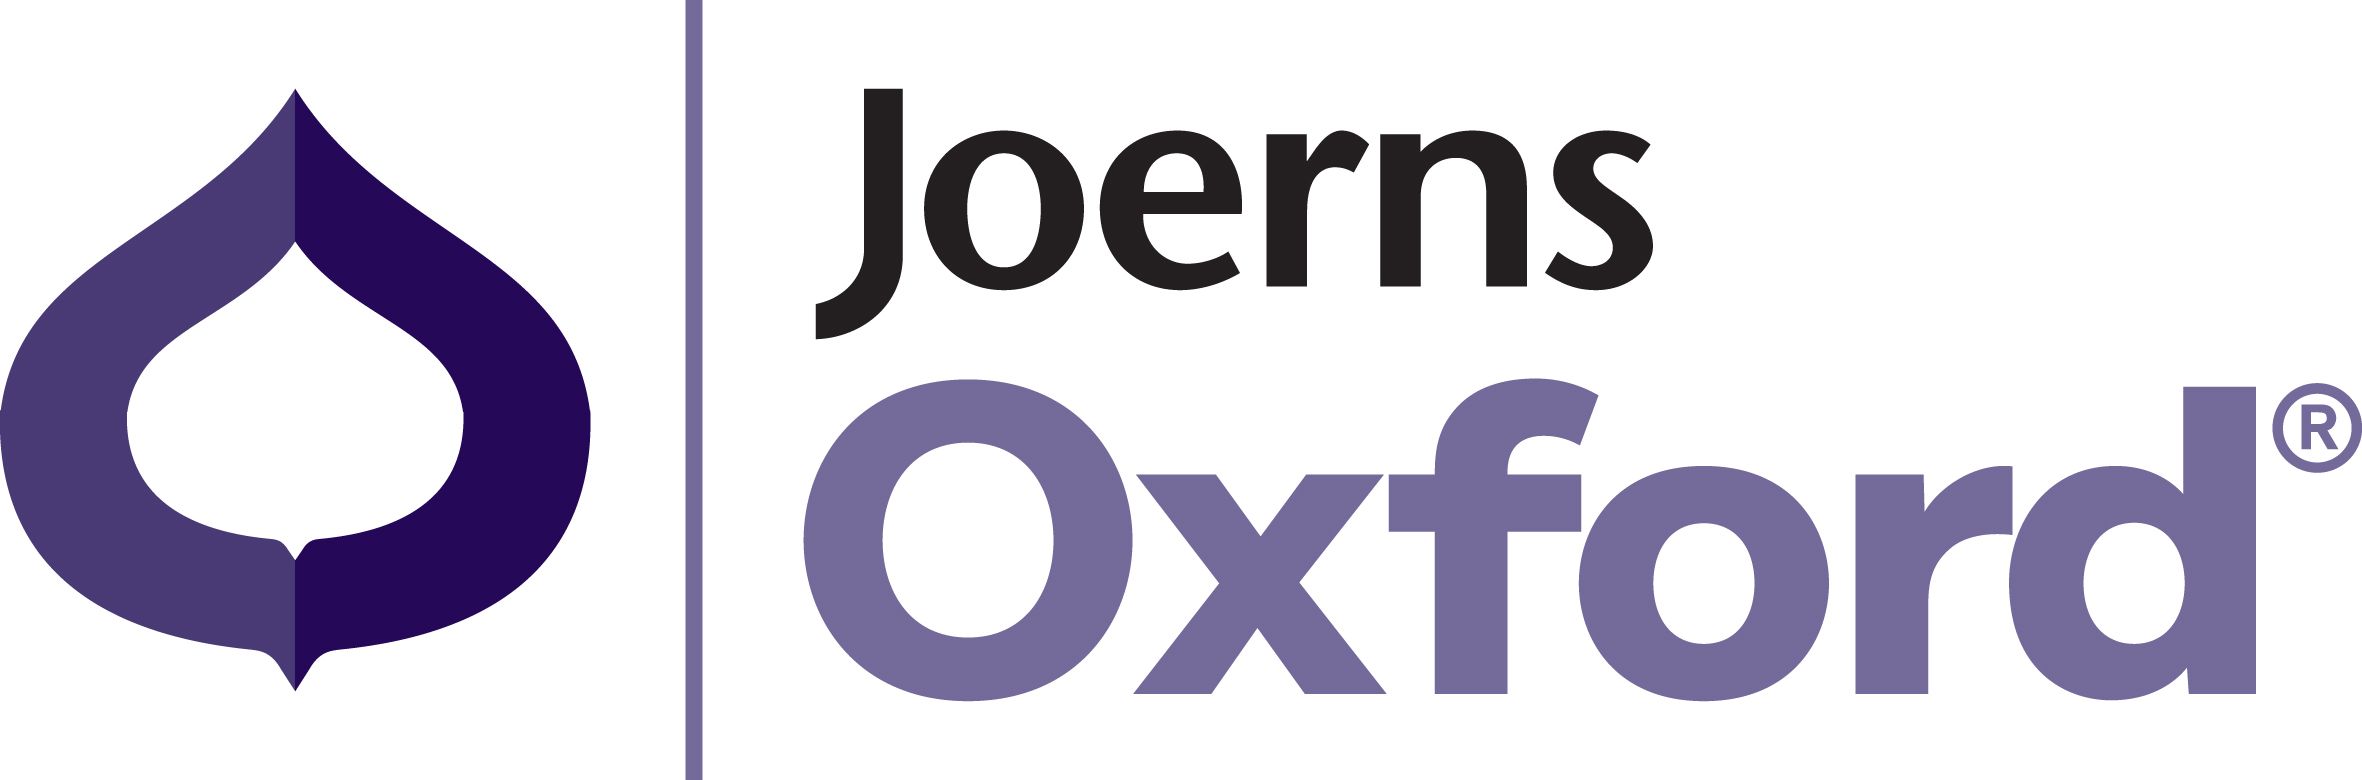 Oxford Hoist (Joerns Healthcare)